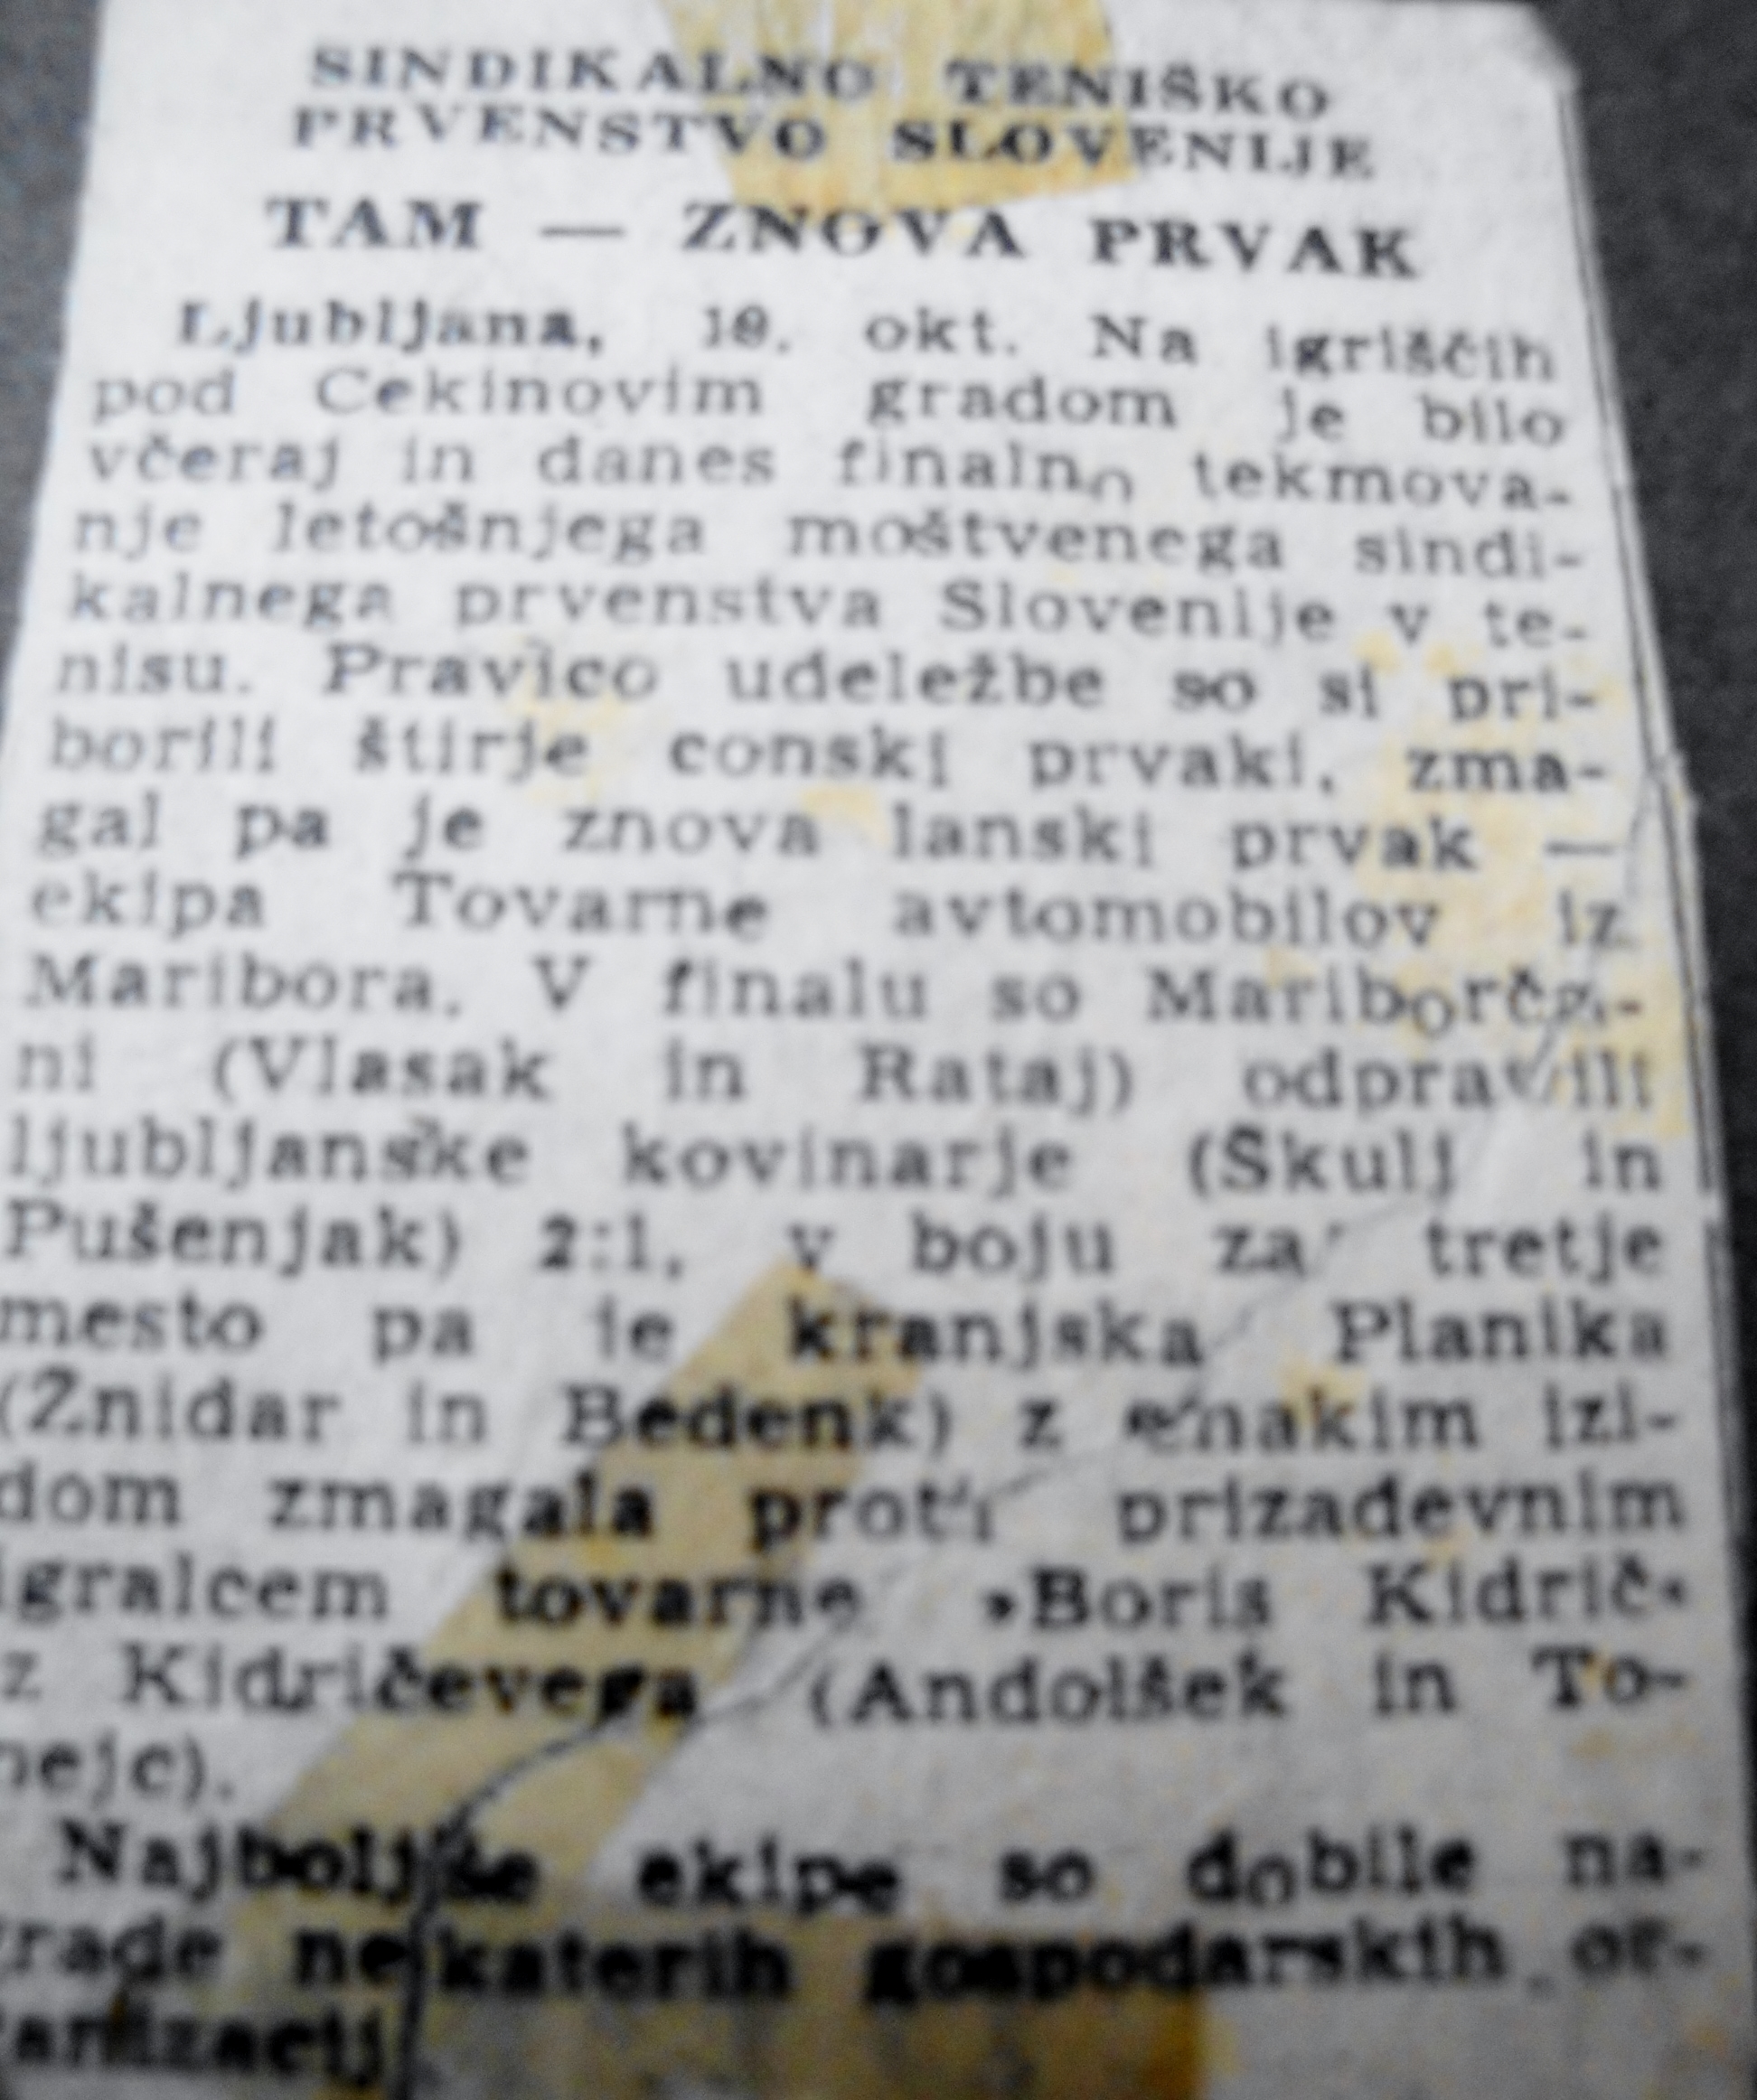 10.10.1958_Sindikalno_prv.Slovenije.JPG